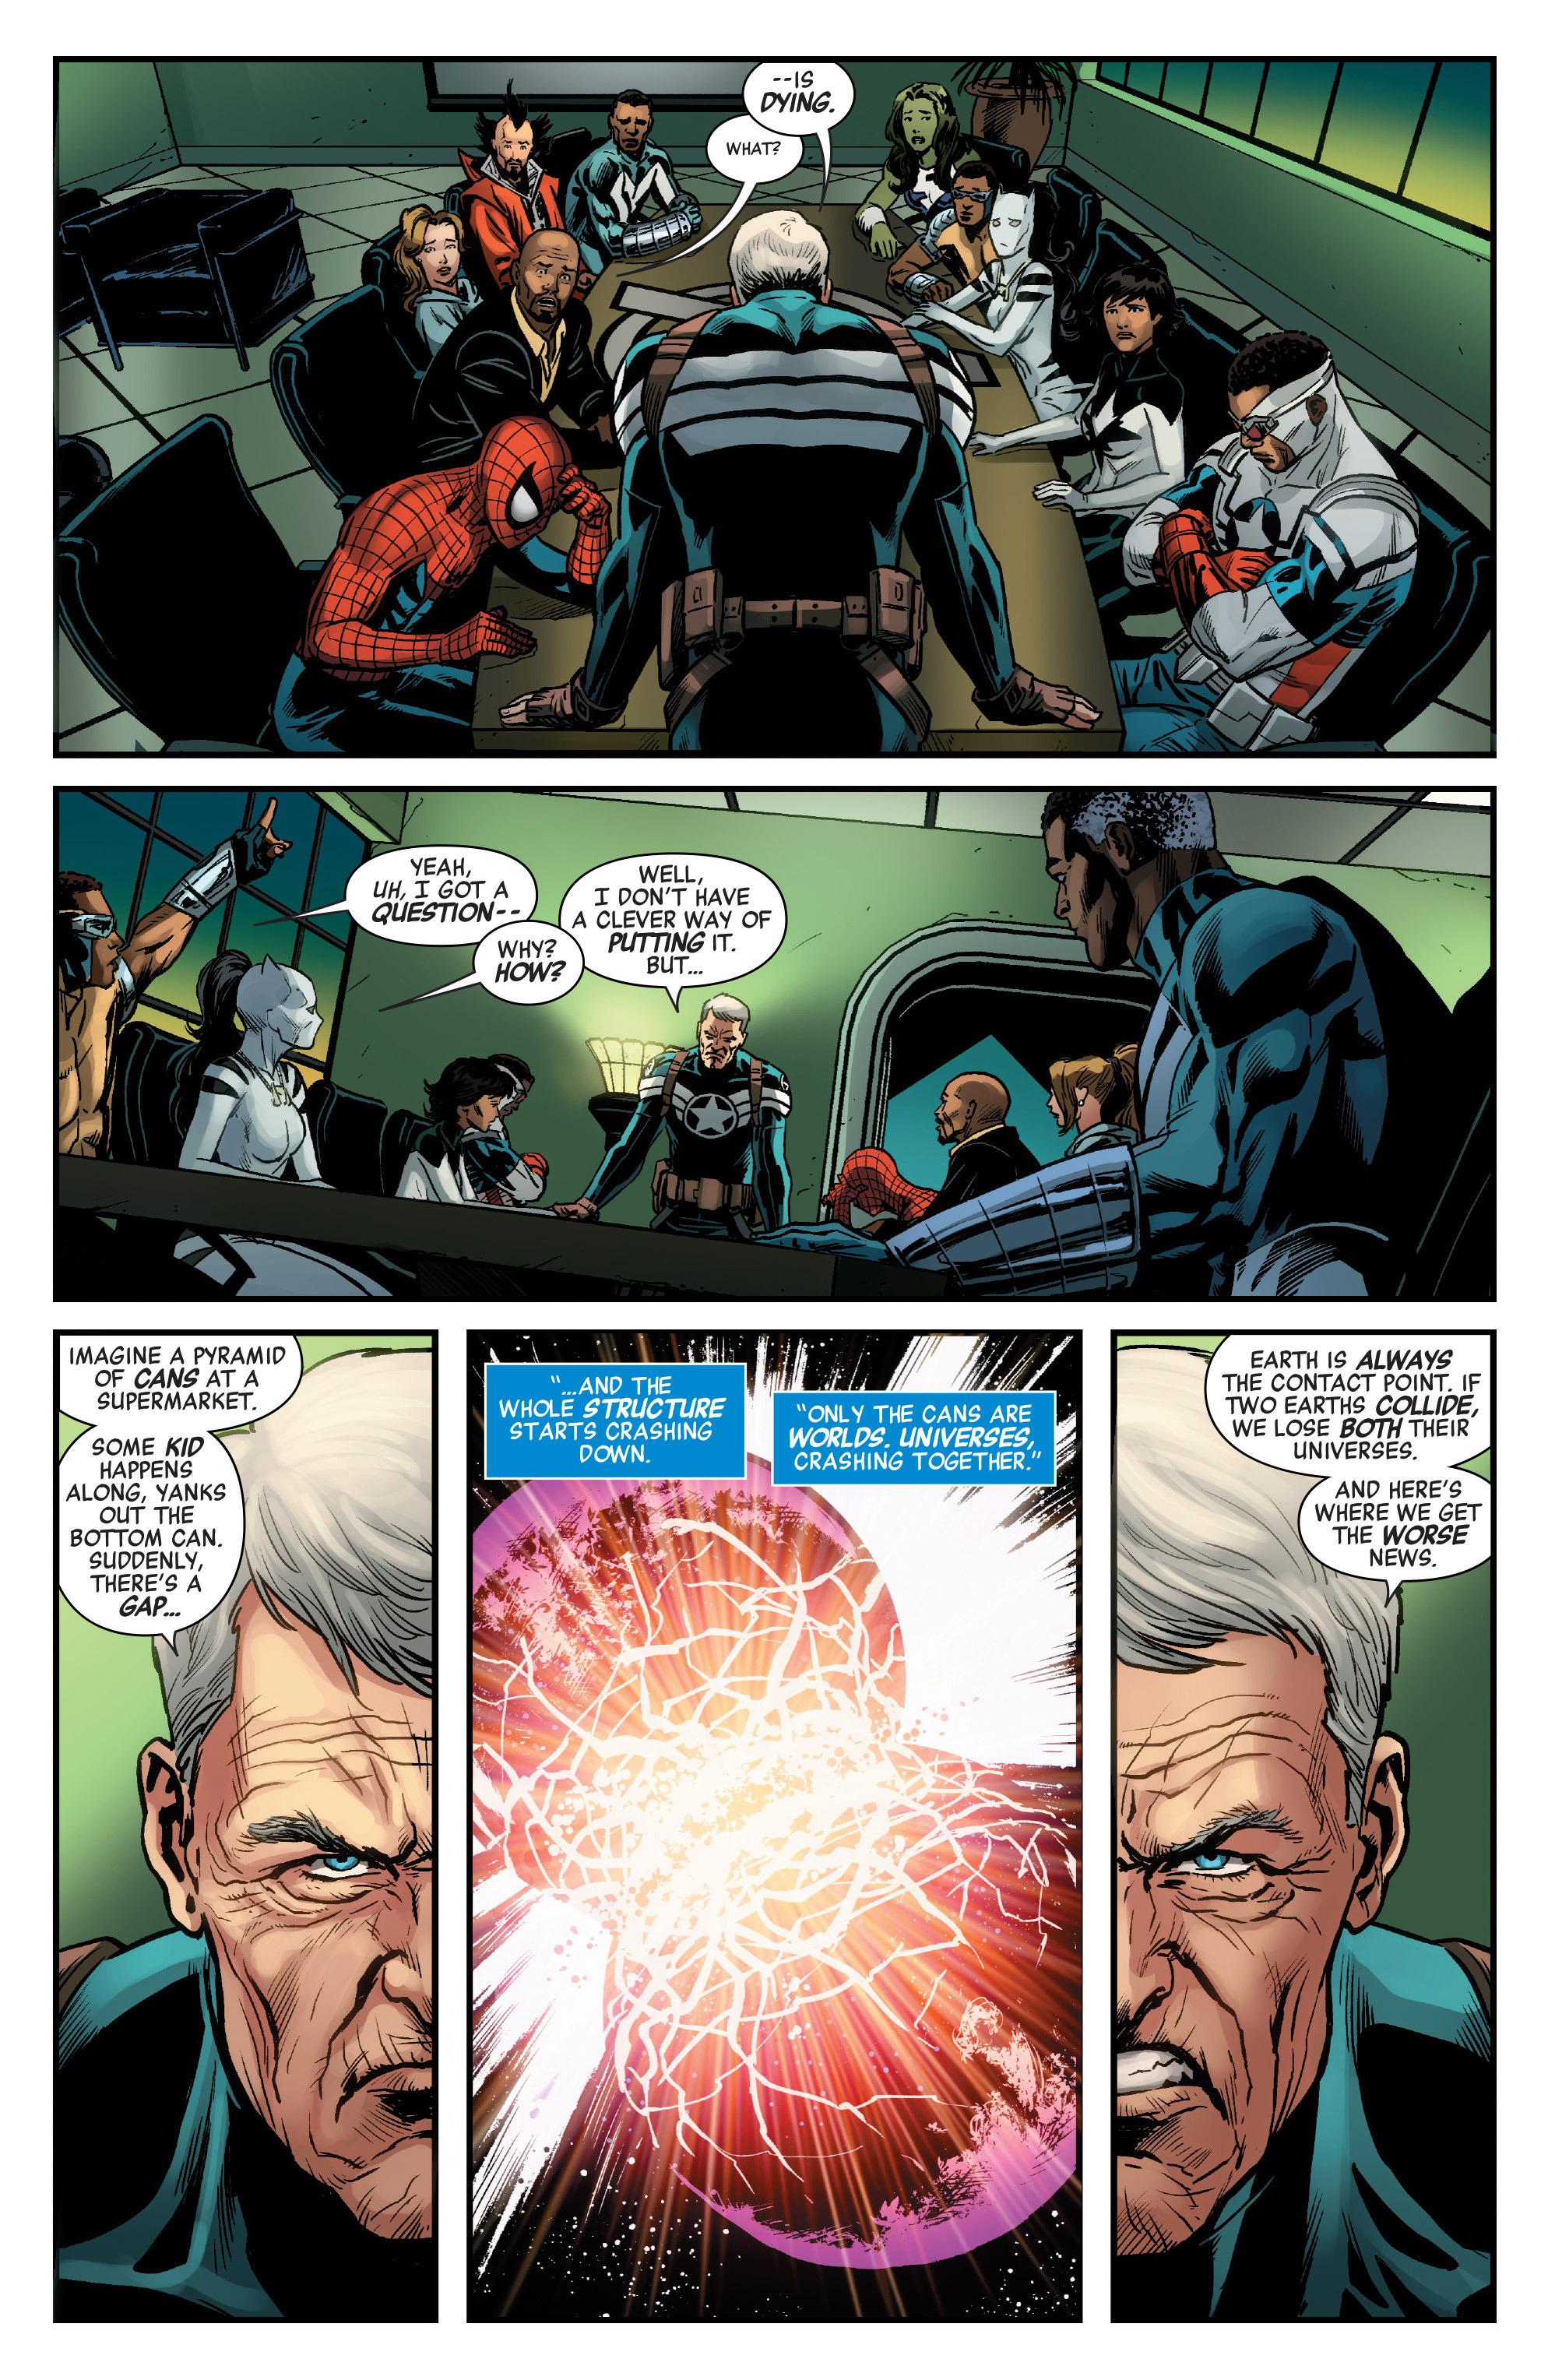 NM Captain America & Mighty Avengers #1 Farinas Variant Marvel, 2015